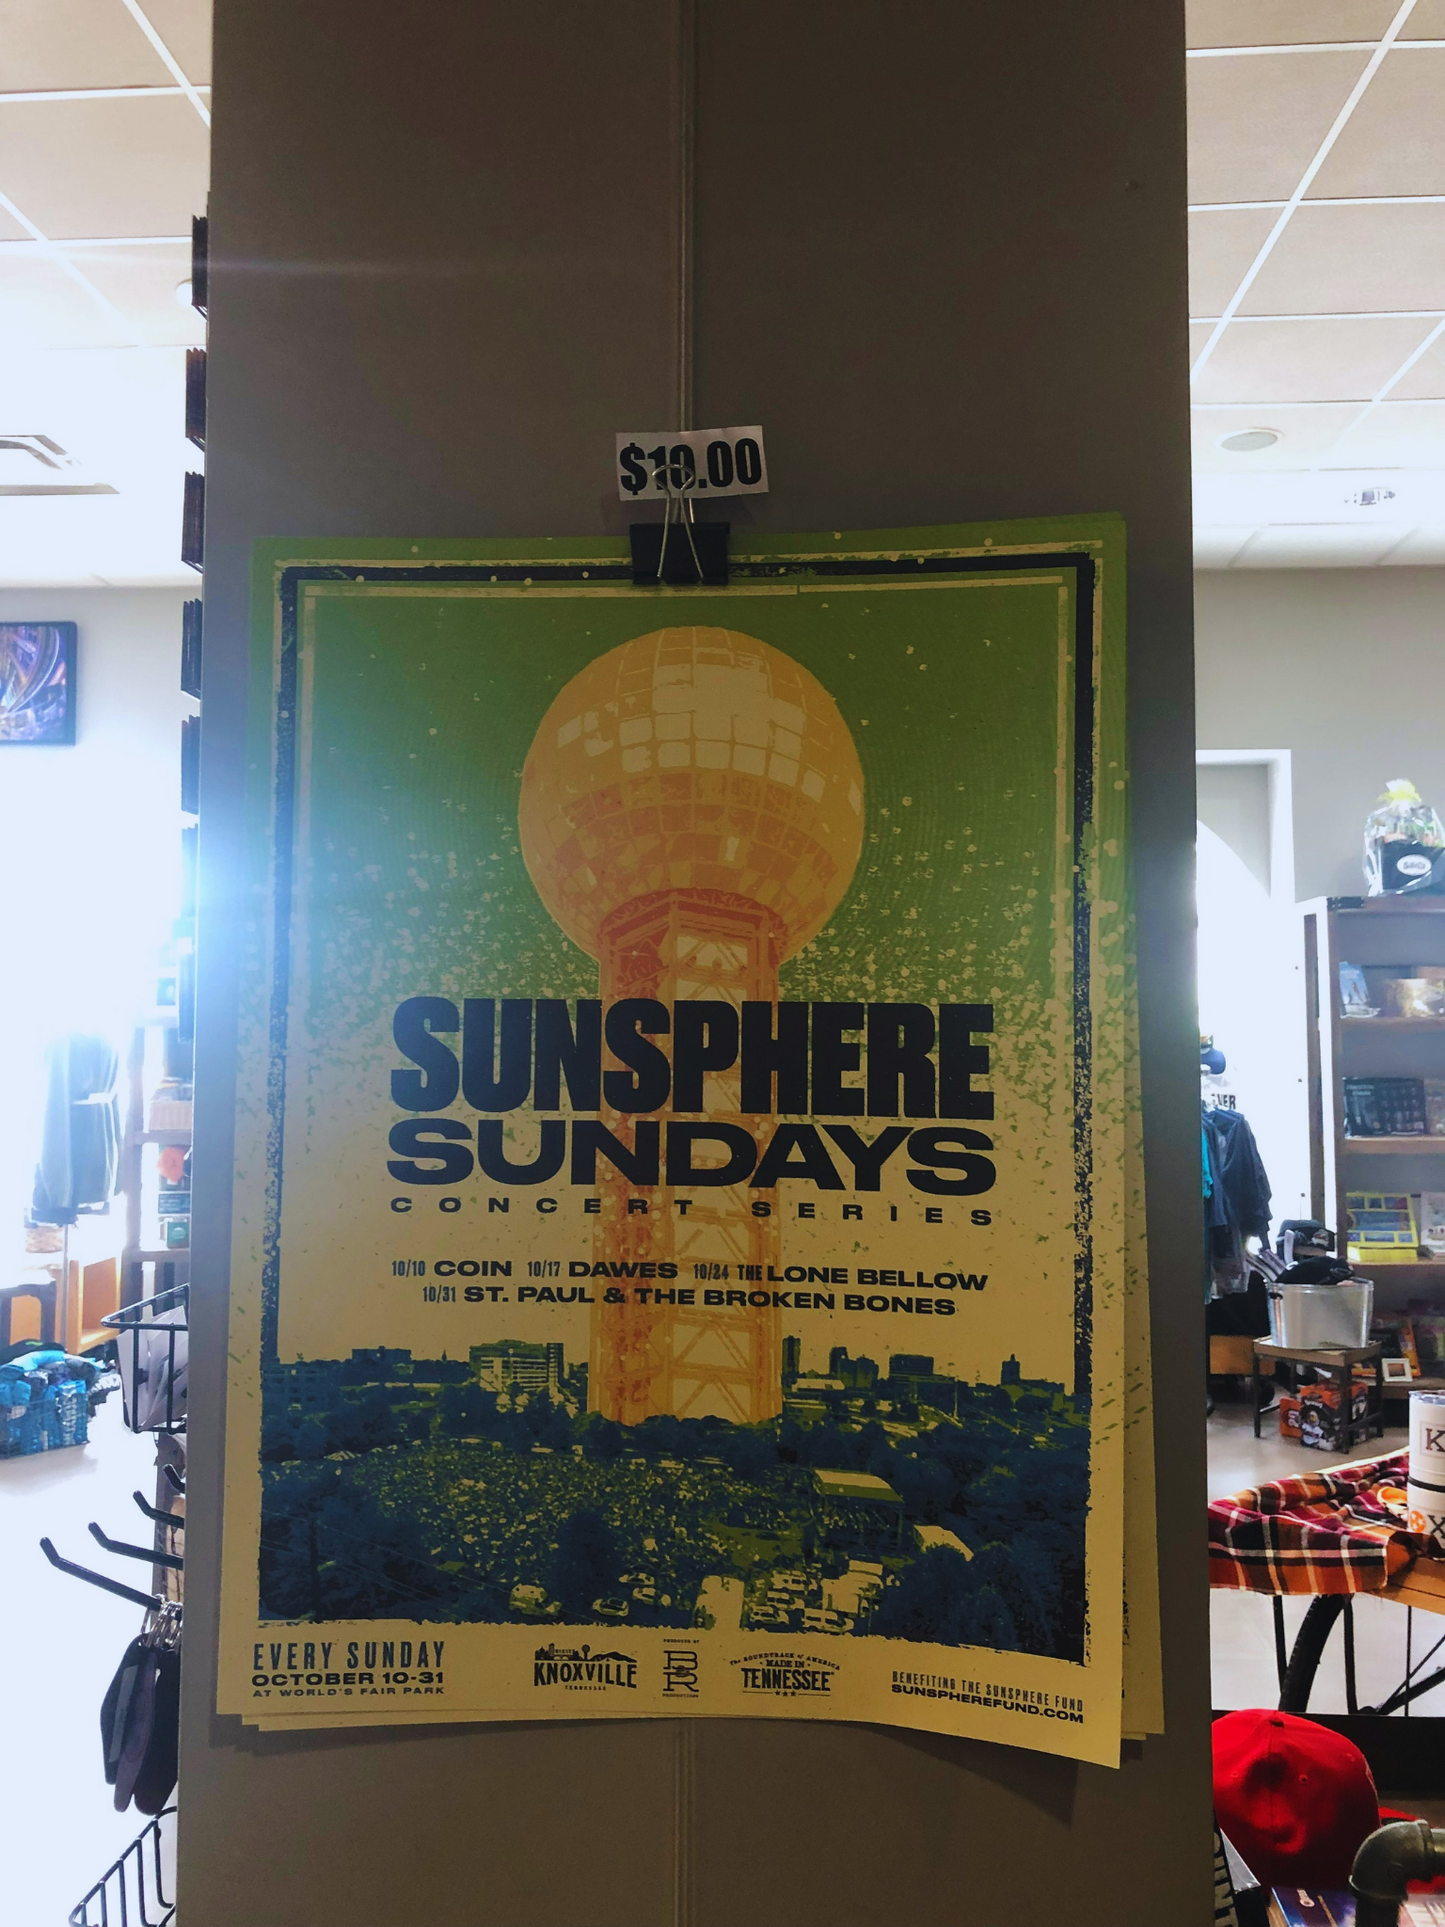 Sunsphere Sundays Concert Series Poster